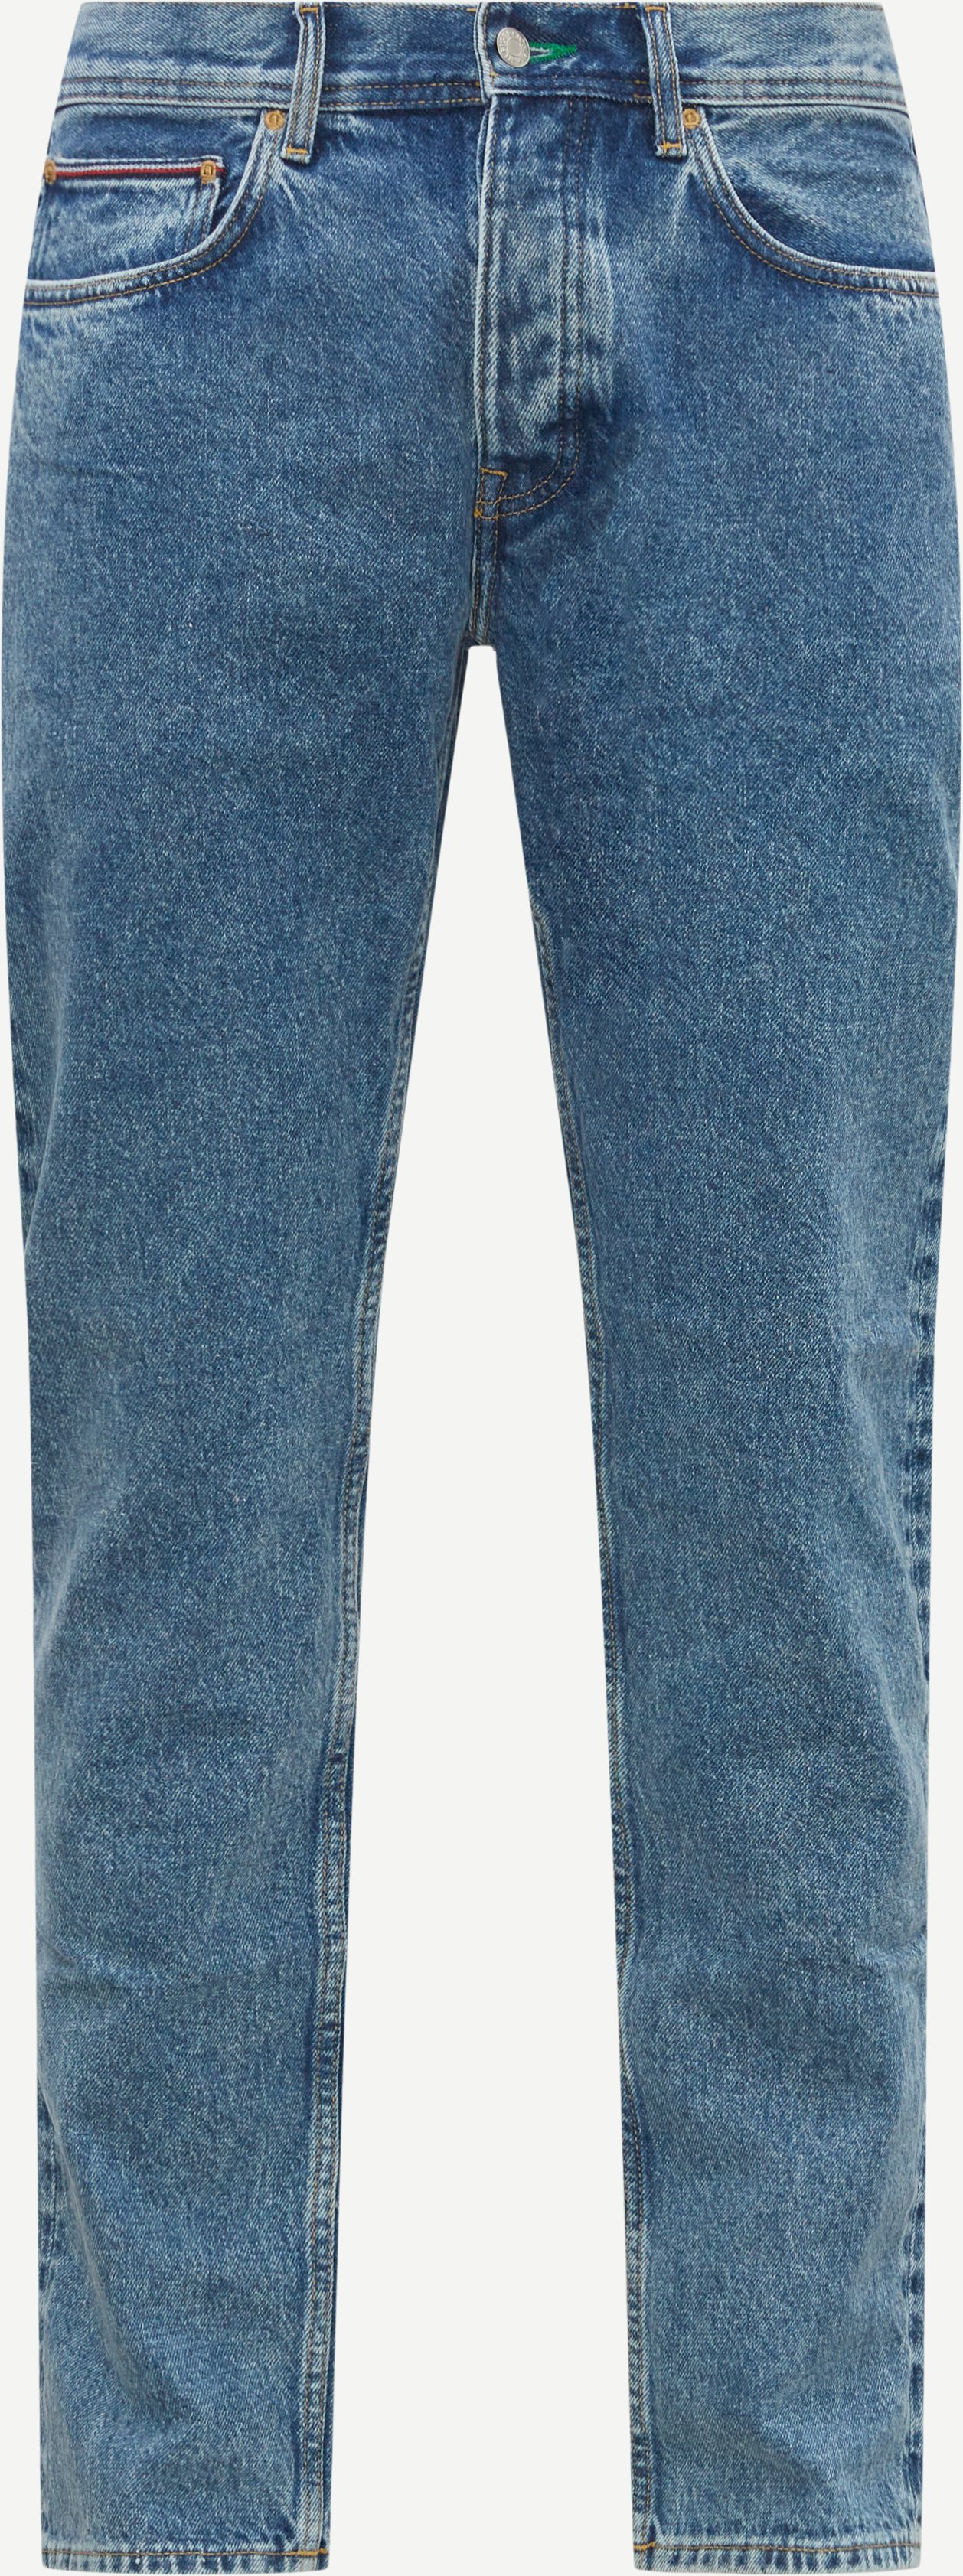 Tommy Hilfiger Jeans 31112 REGULAR MERCER RGD ICON CIRC Denim